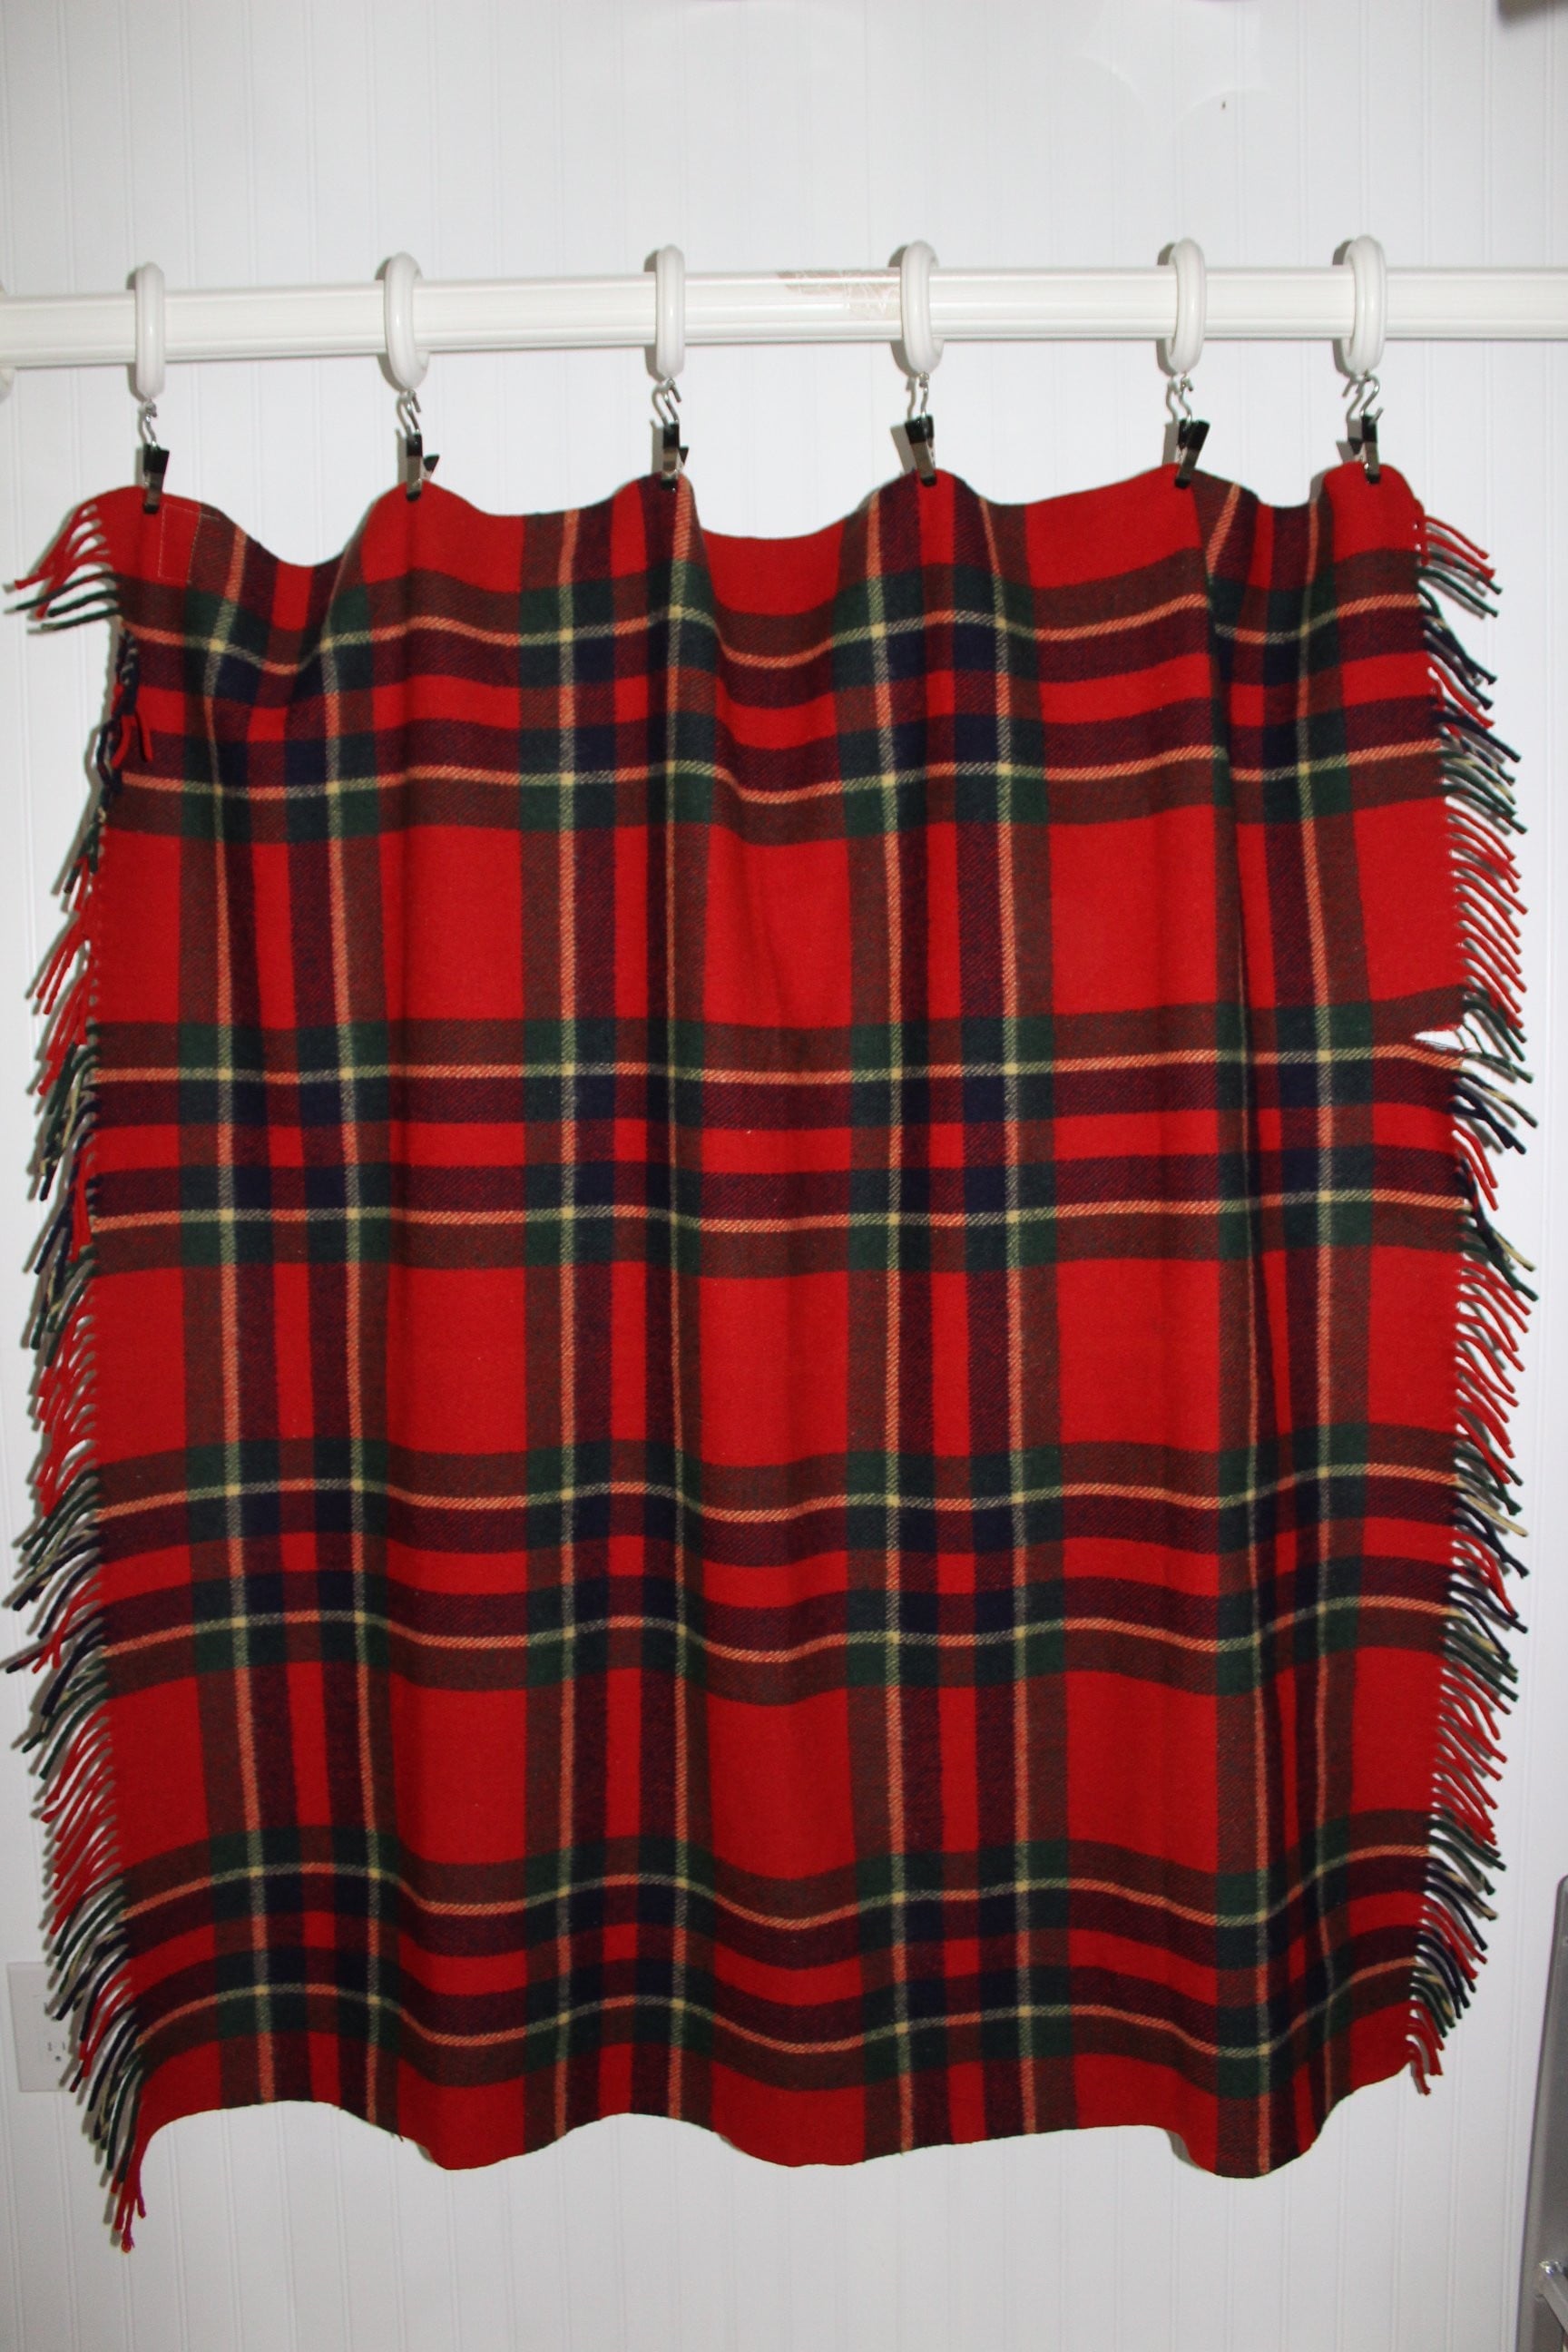 TROY Robe Blanket Vintage Throw Red Green Black Plaid warm